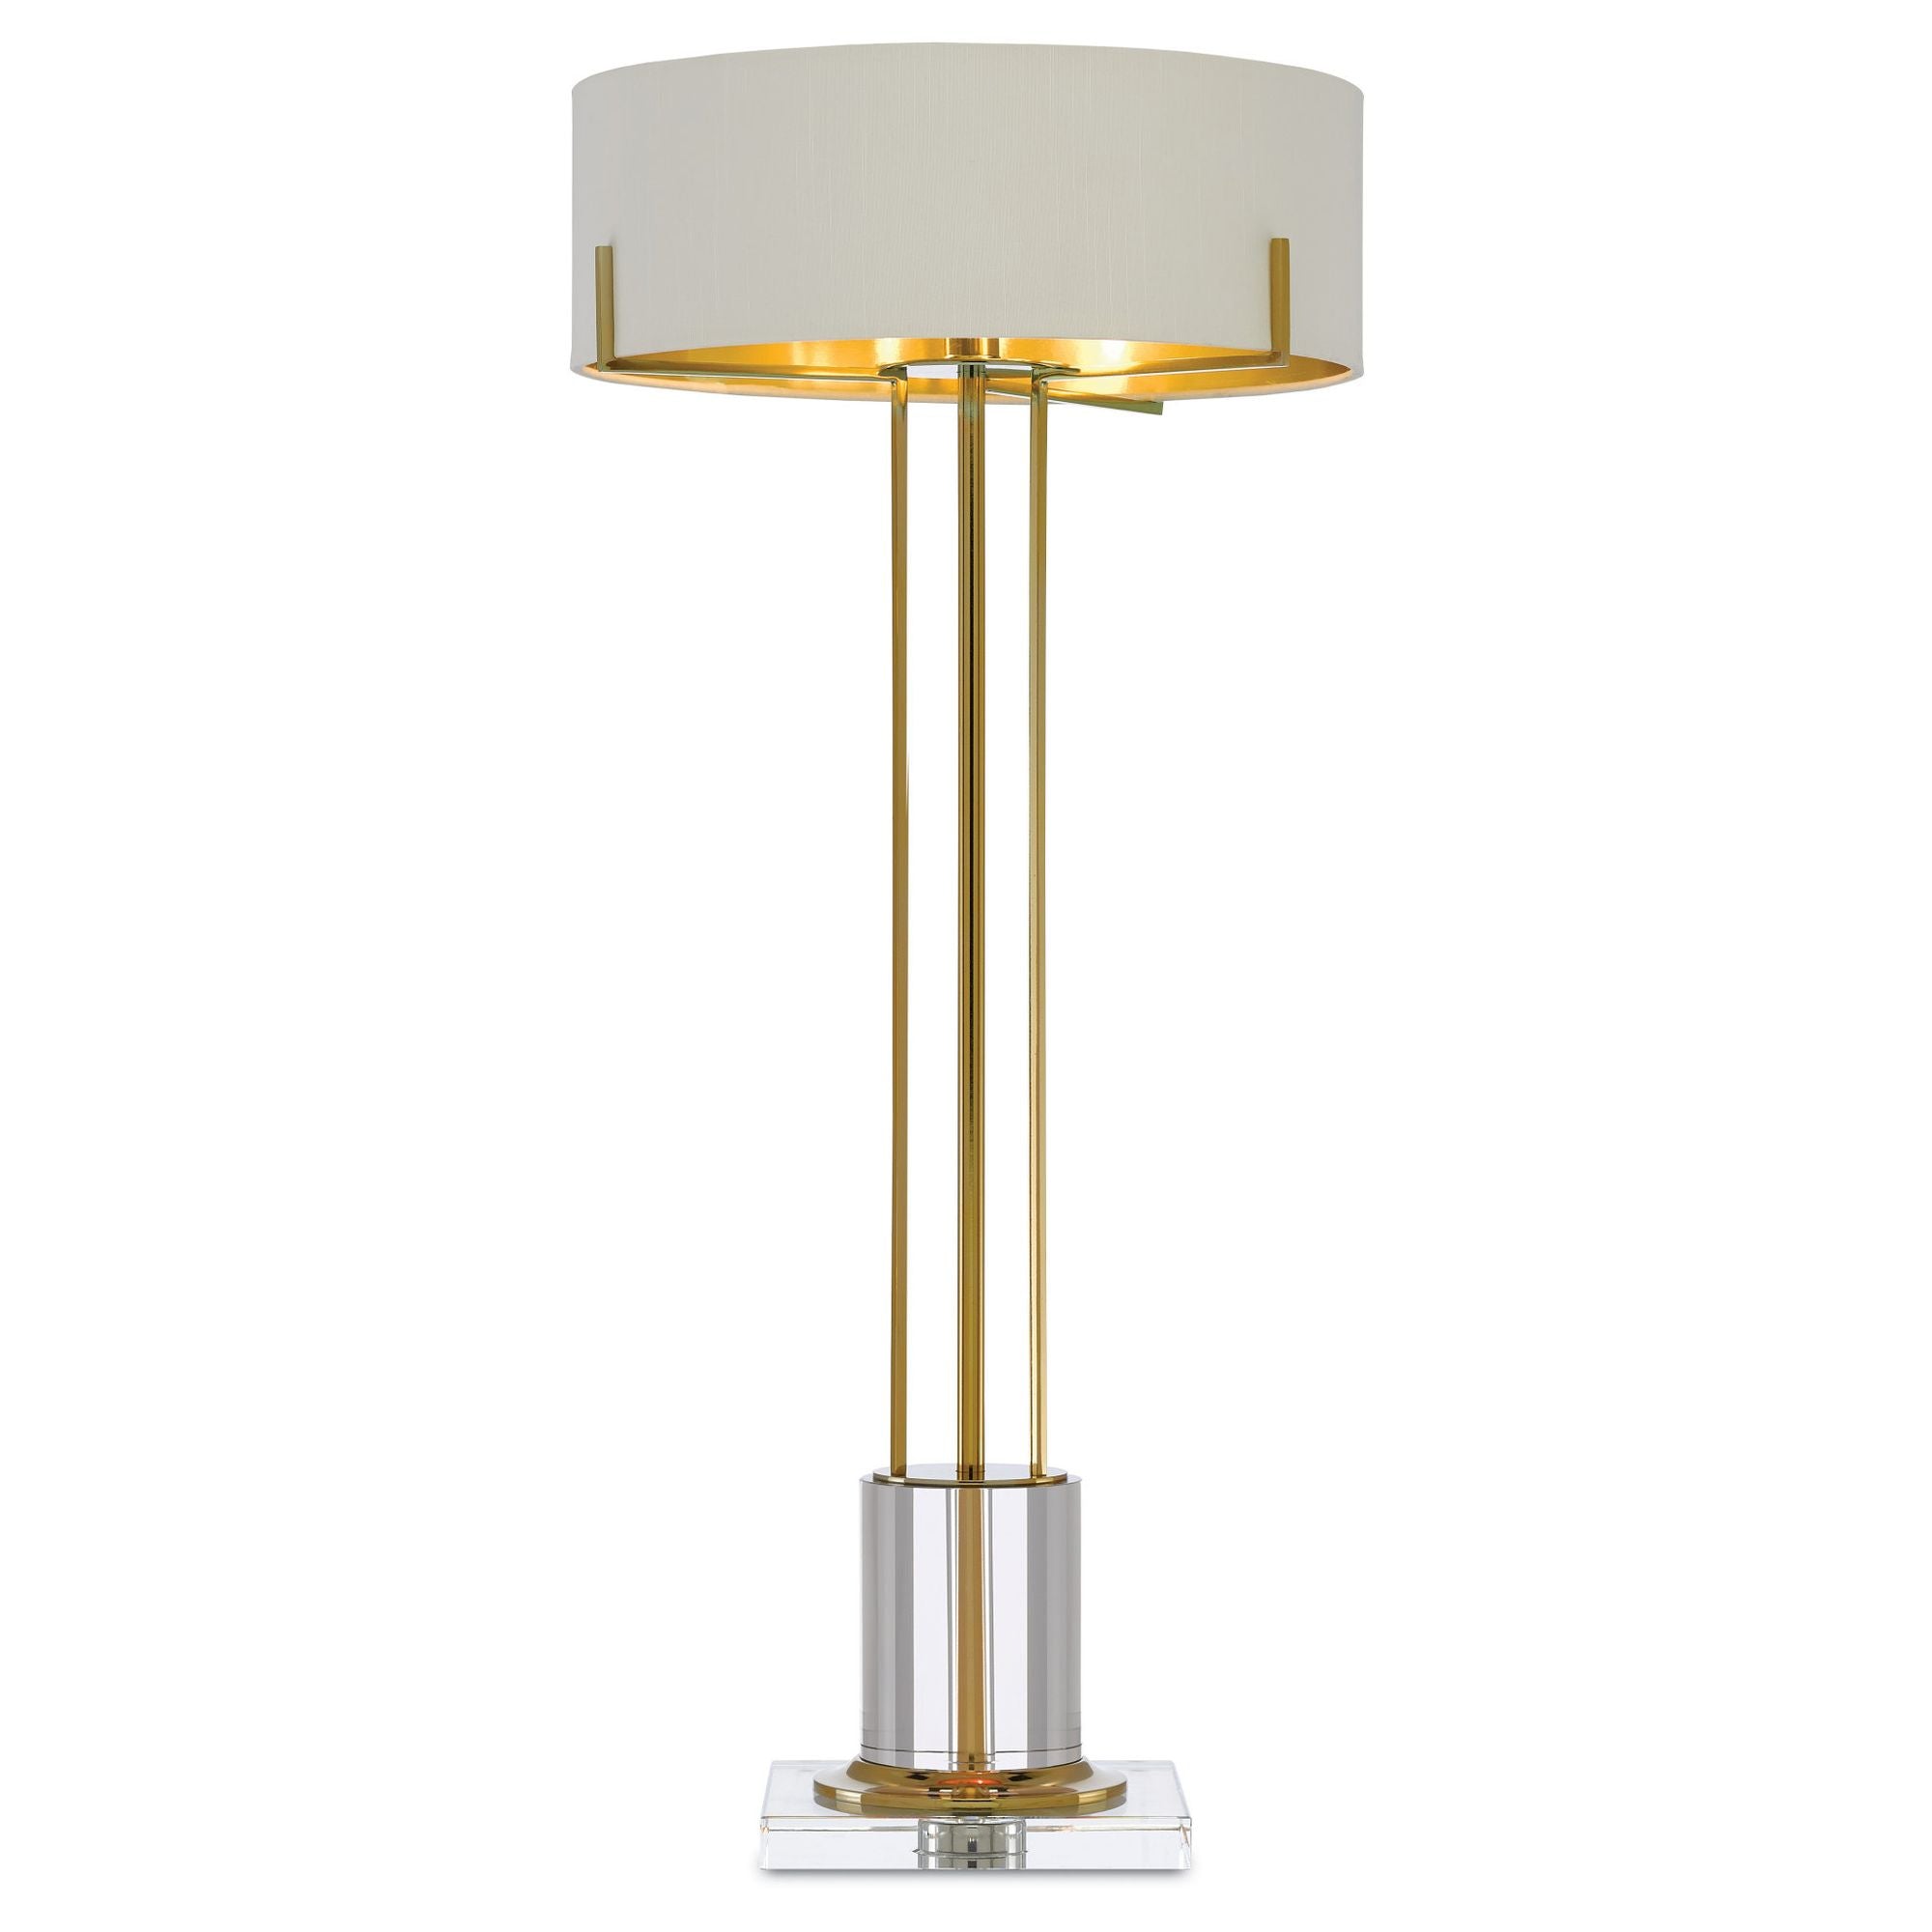 Winsland Brass Table Lamp - Polished Brass/Clear